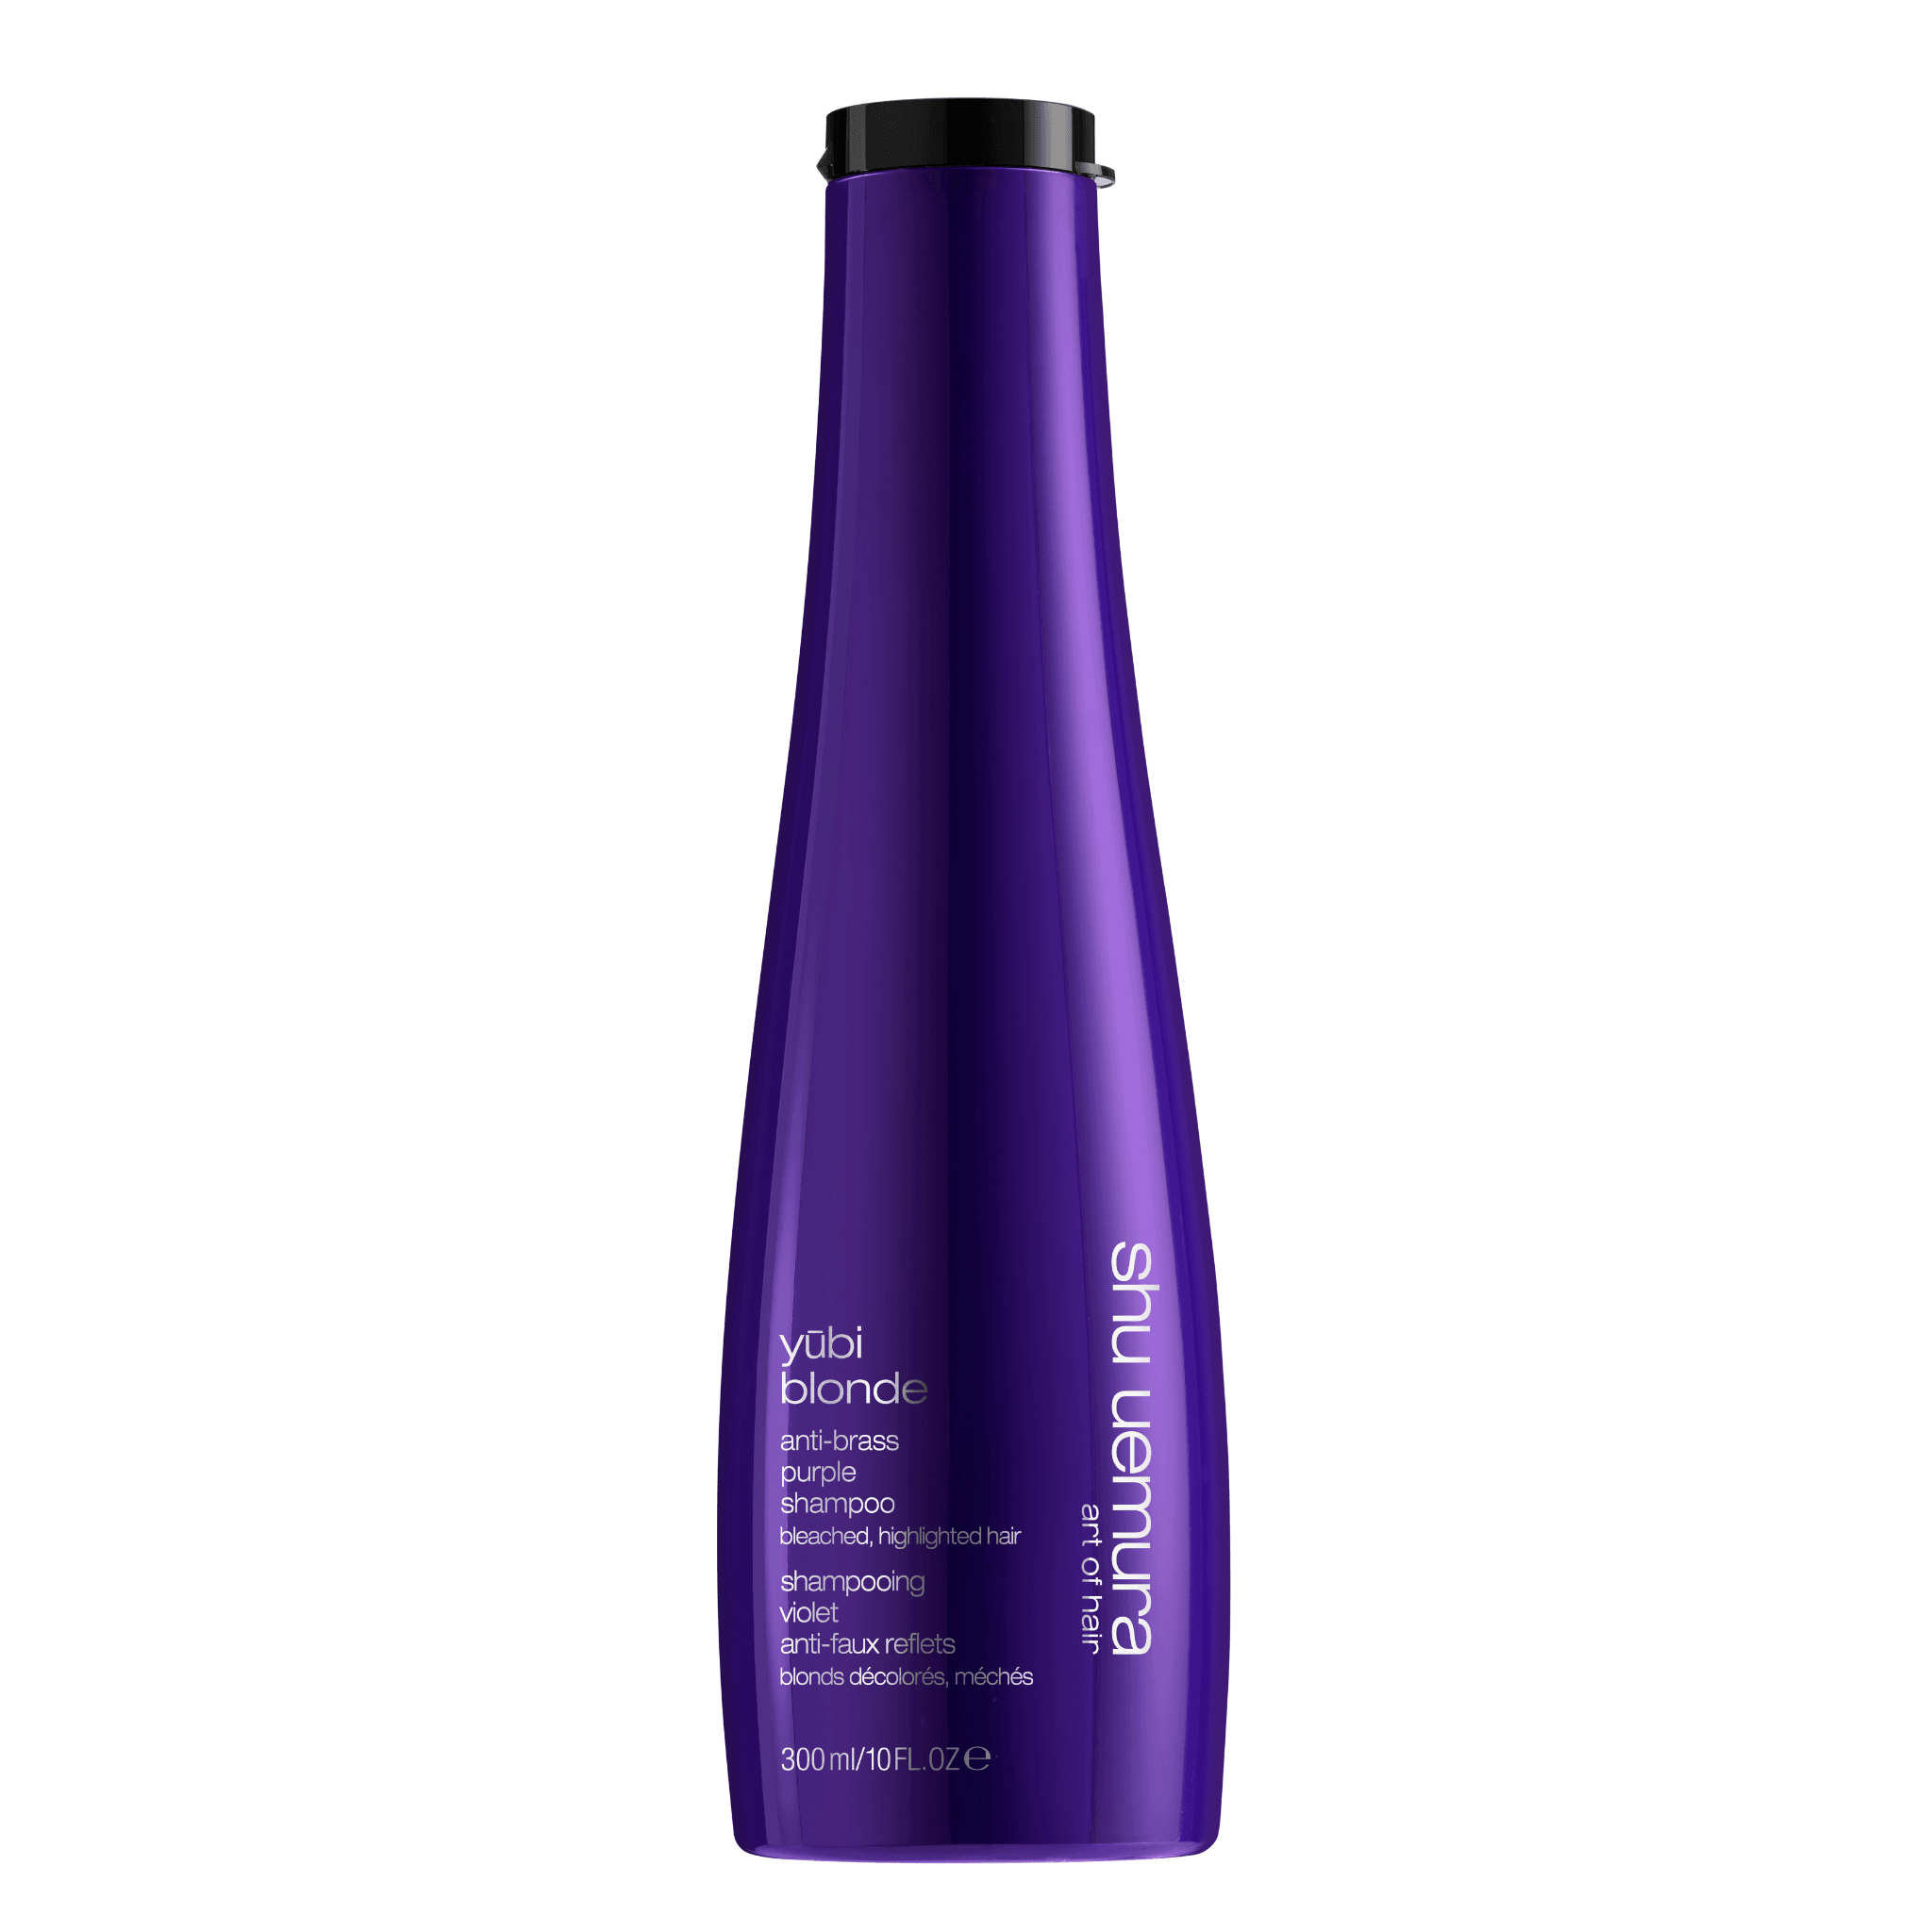 Shu Uemura. Shampoing Violet Anti-Faux Reflets Yubi Blonde - 300 ml - Concept C. Shop